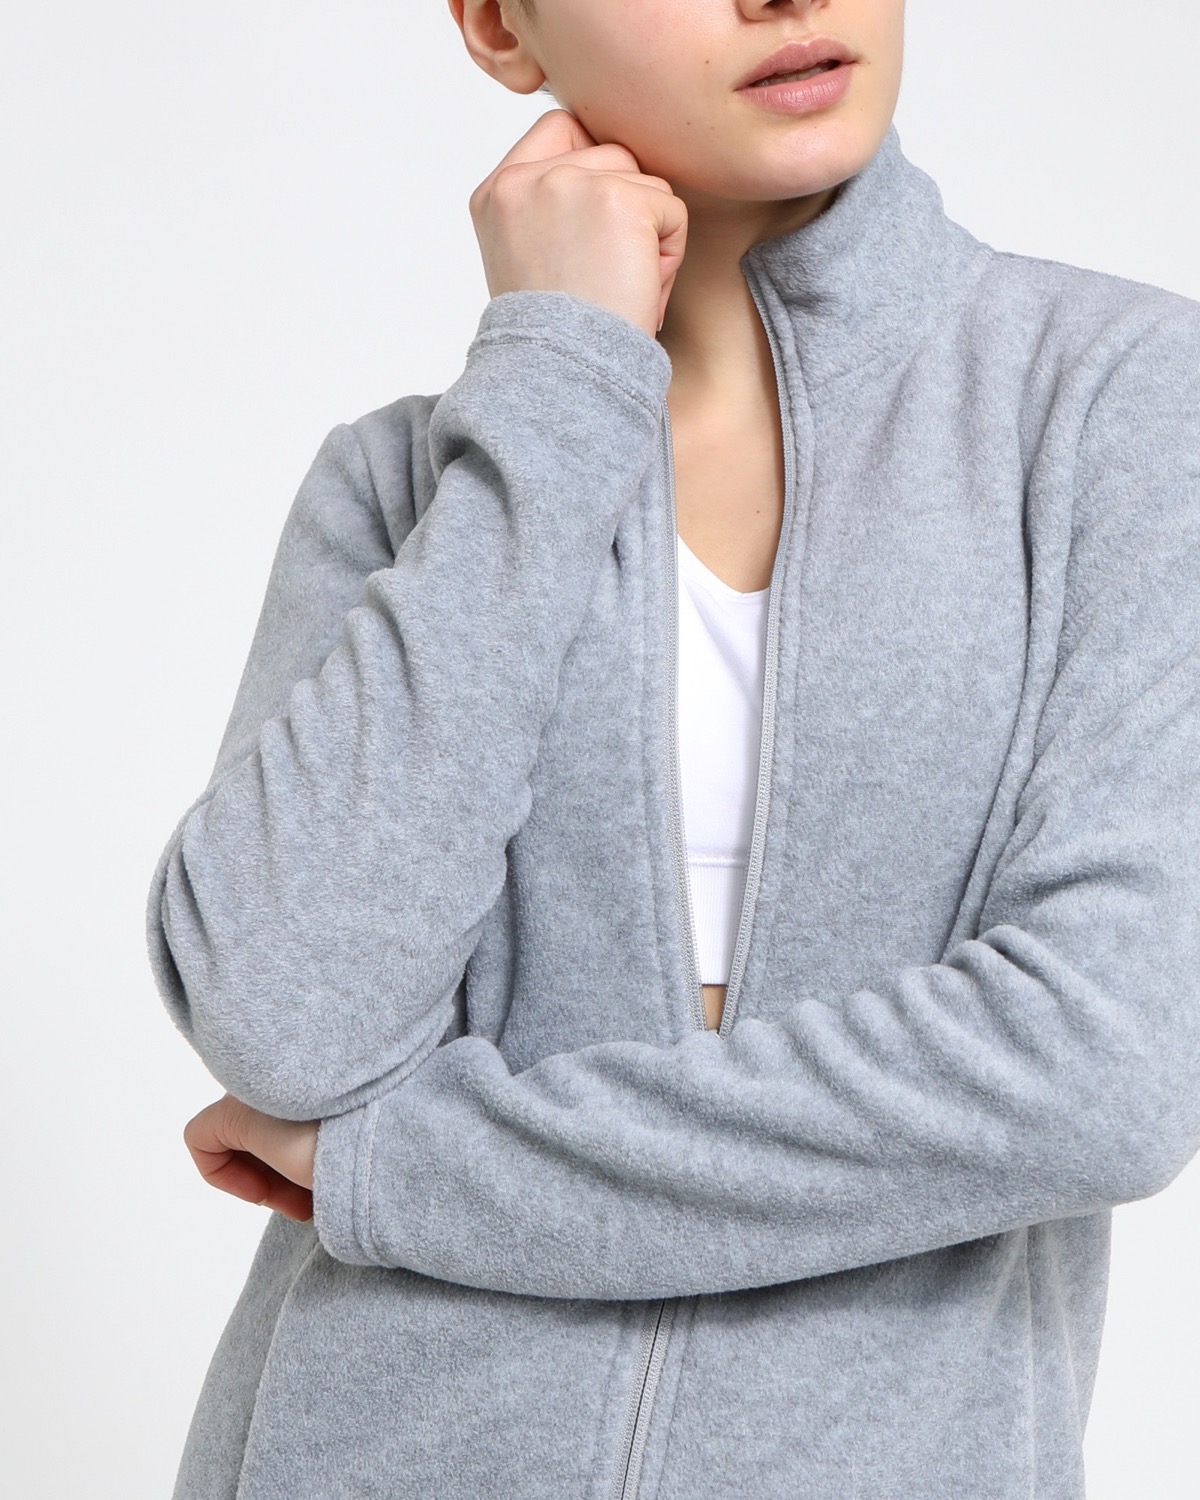 Brilliant Basics Women's Pocket Fleece Track Pants - Grey Marl - Size Small